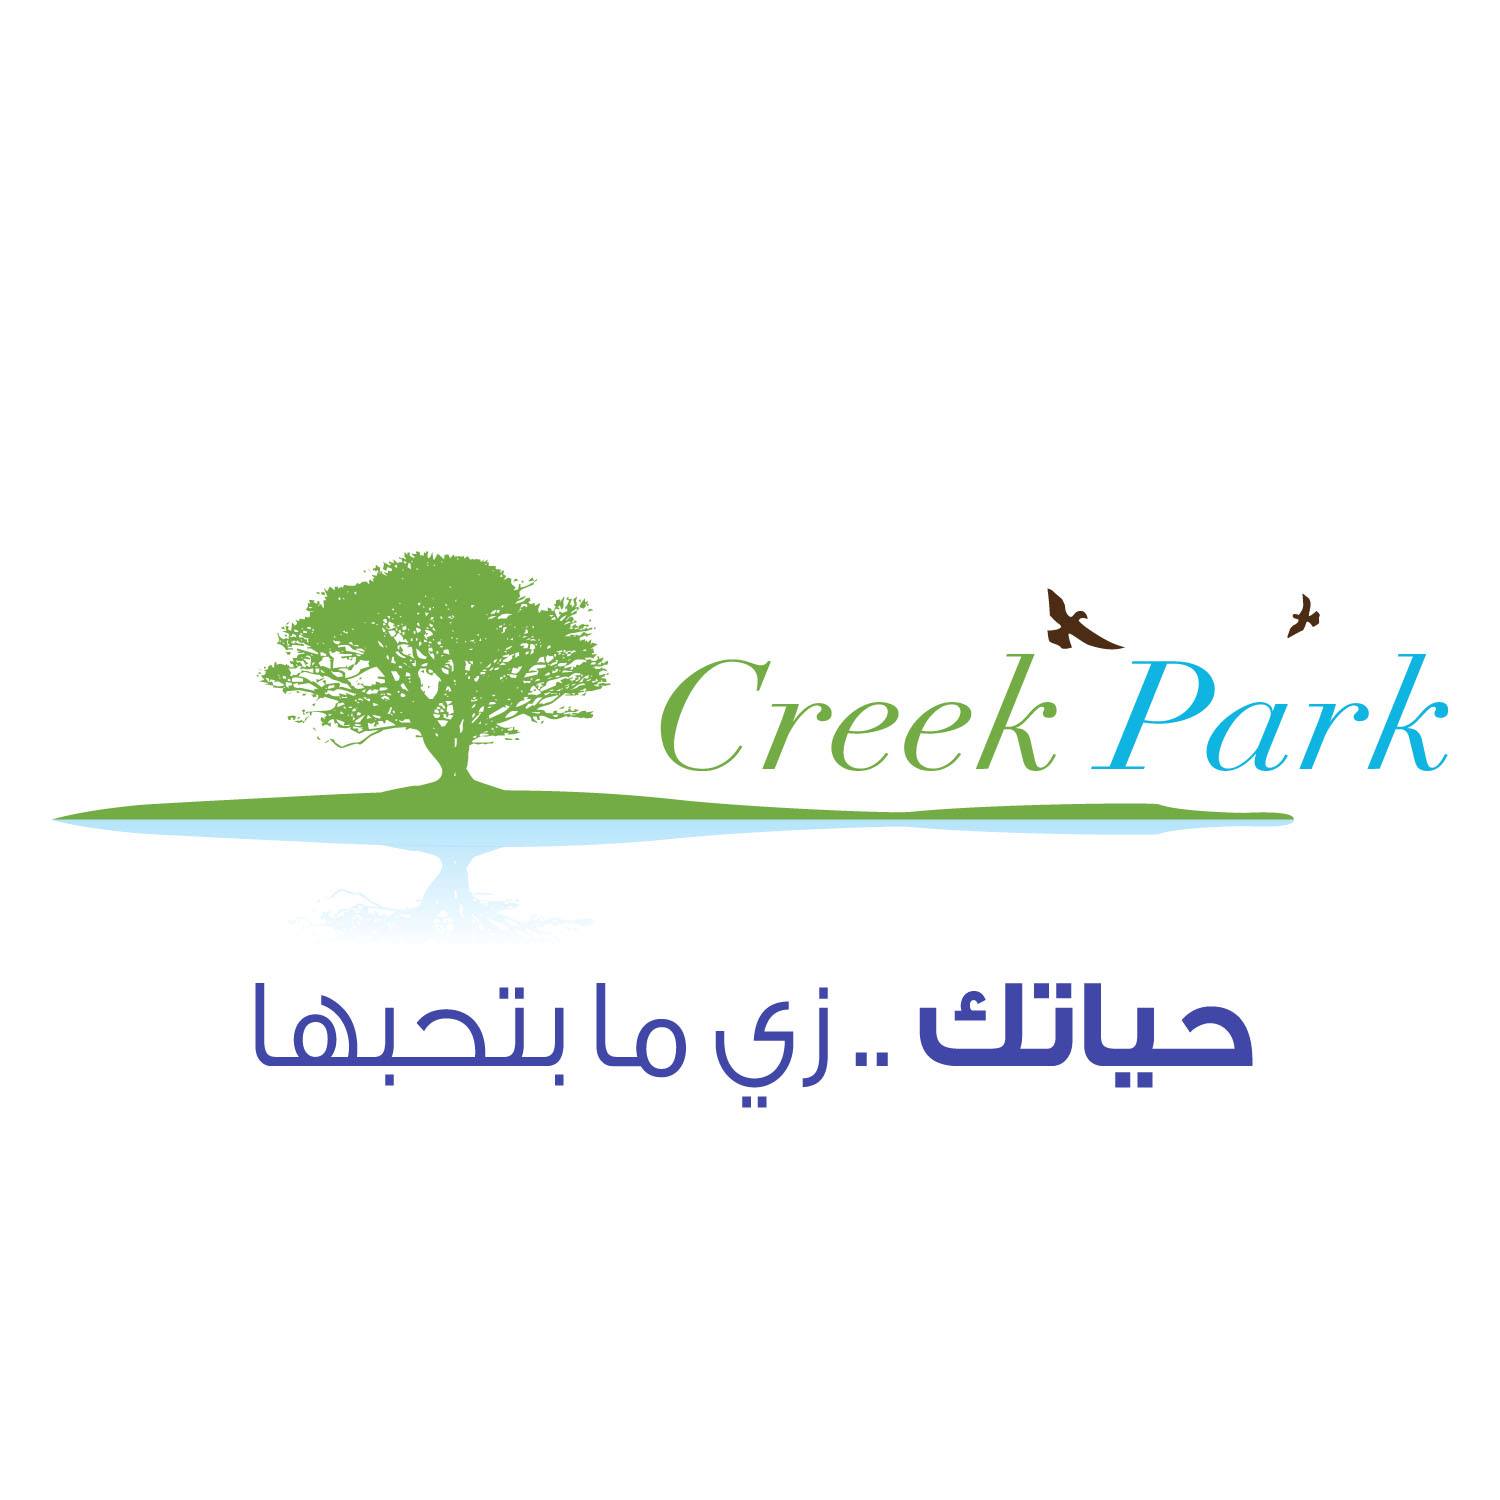 Greek Park